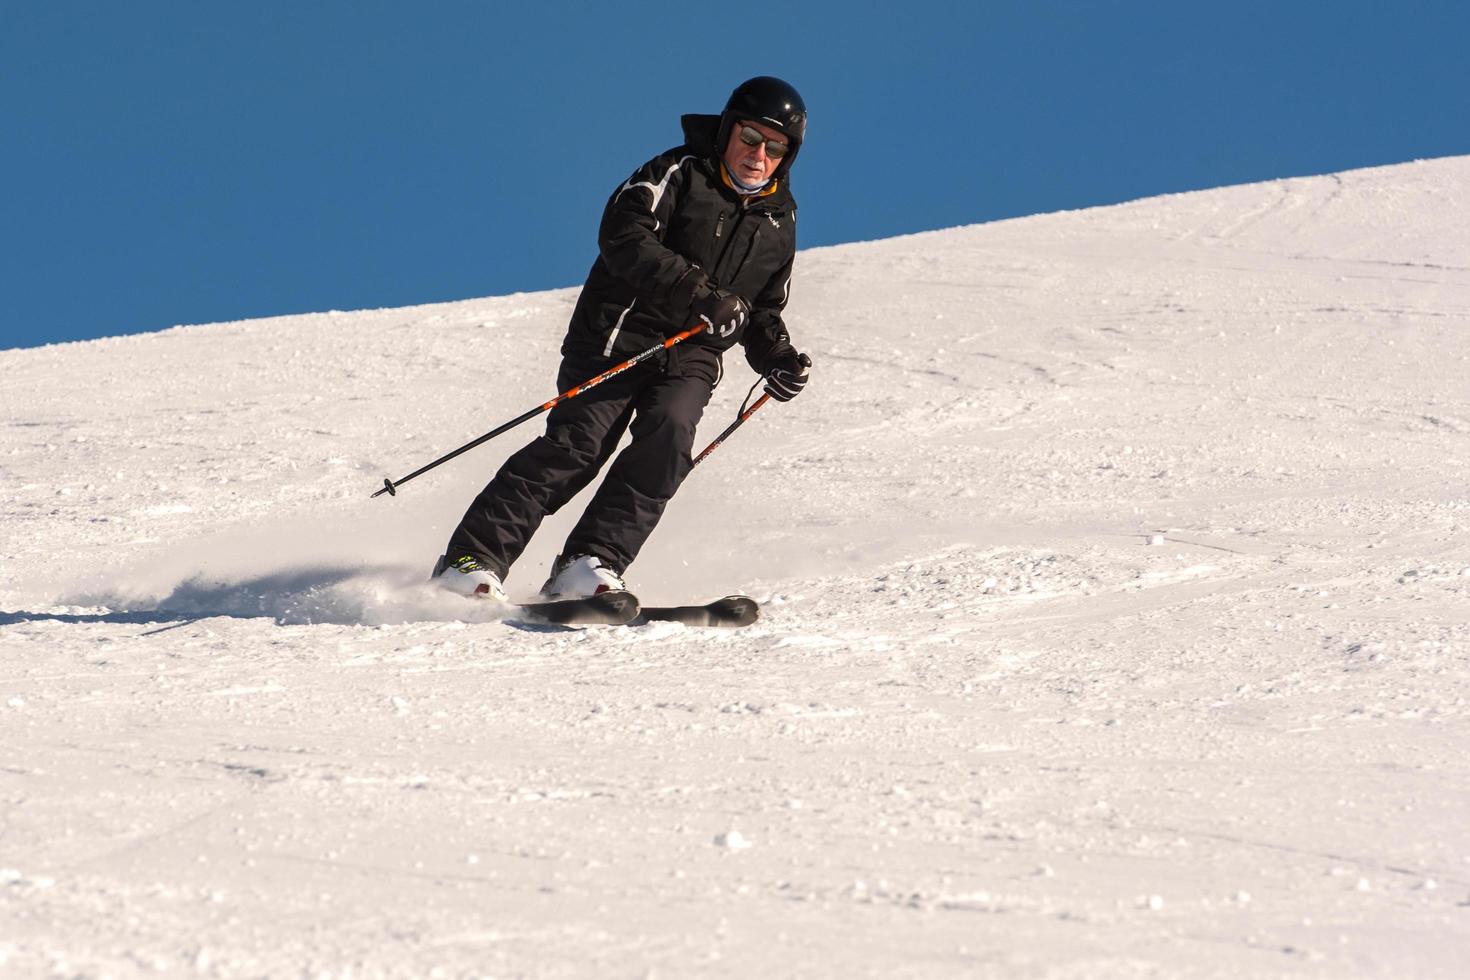 grandvalira, andorre, jan 03, 2021 - jeune homme skiant dans les pyrénées à la station de ski de grandvalira photo